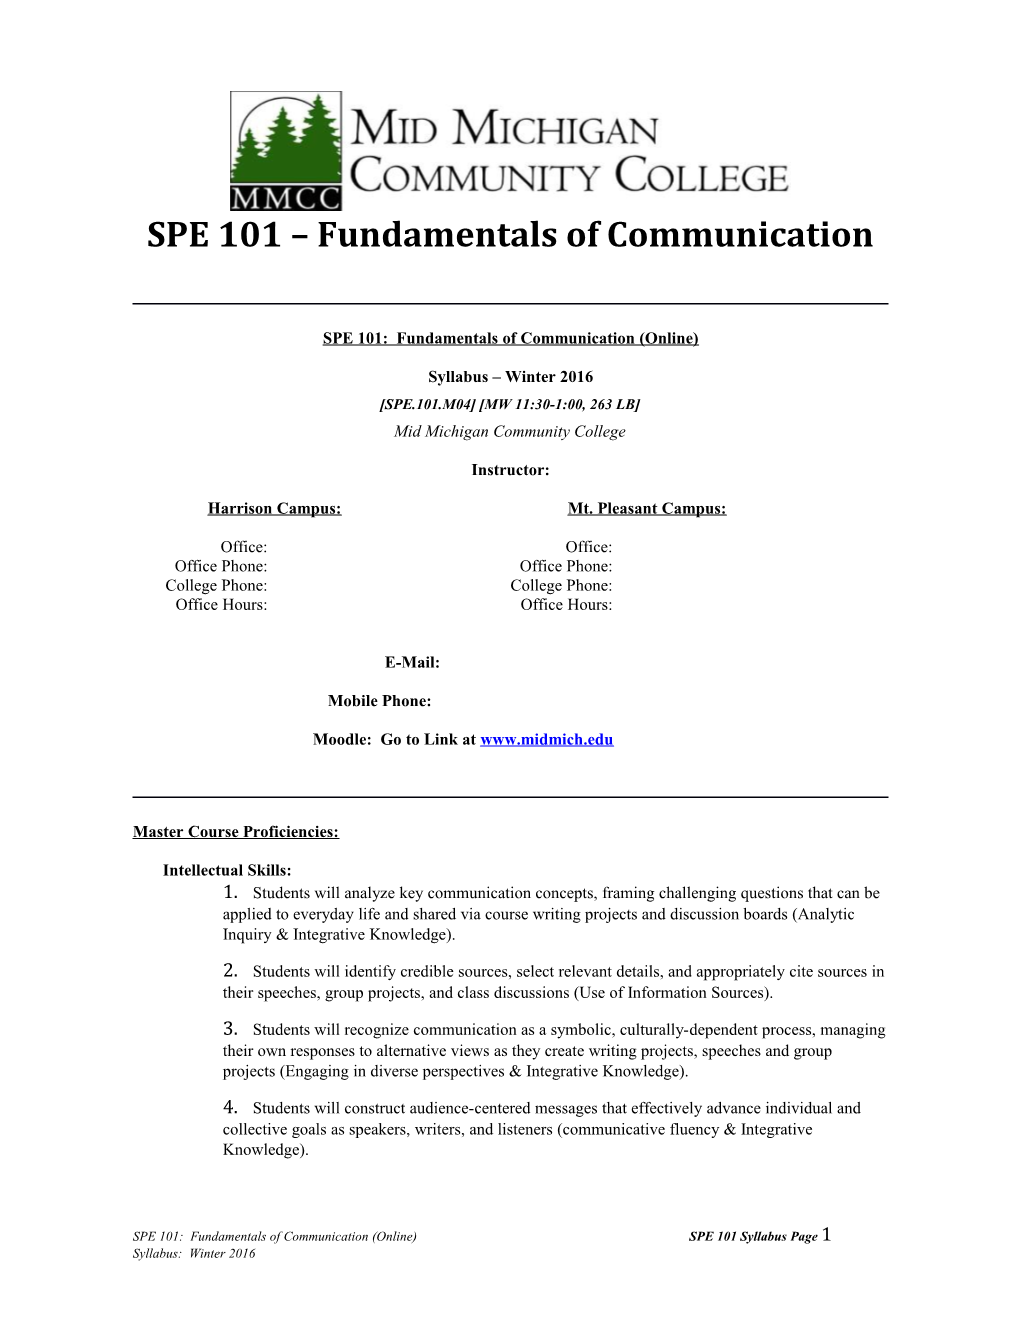 SPE 101: Fundamentals of Communication (Online)